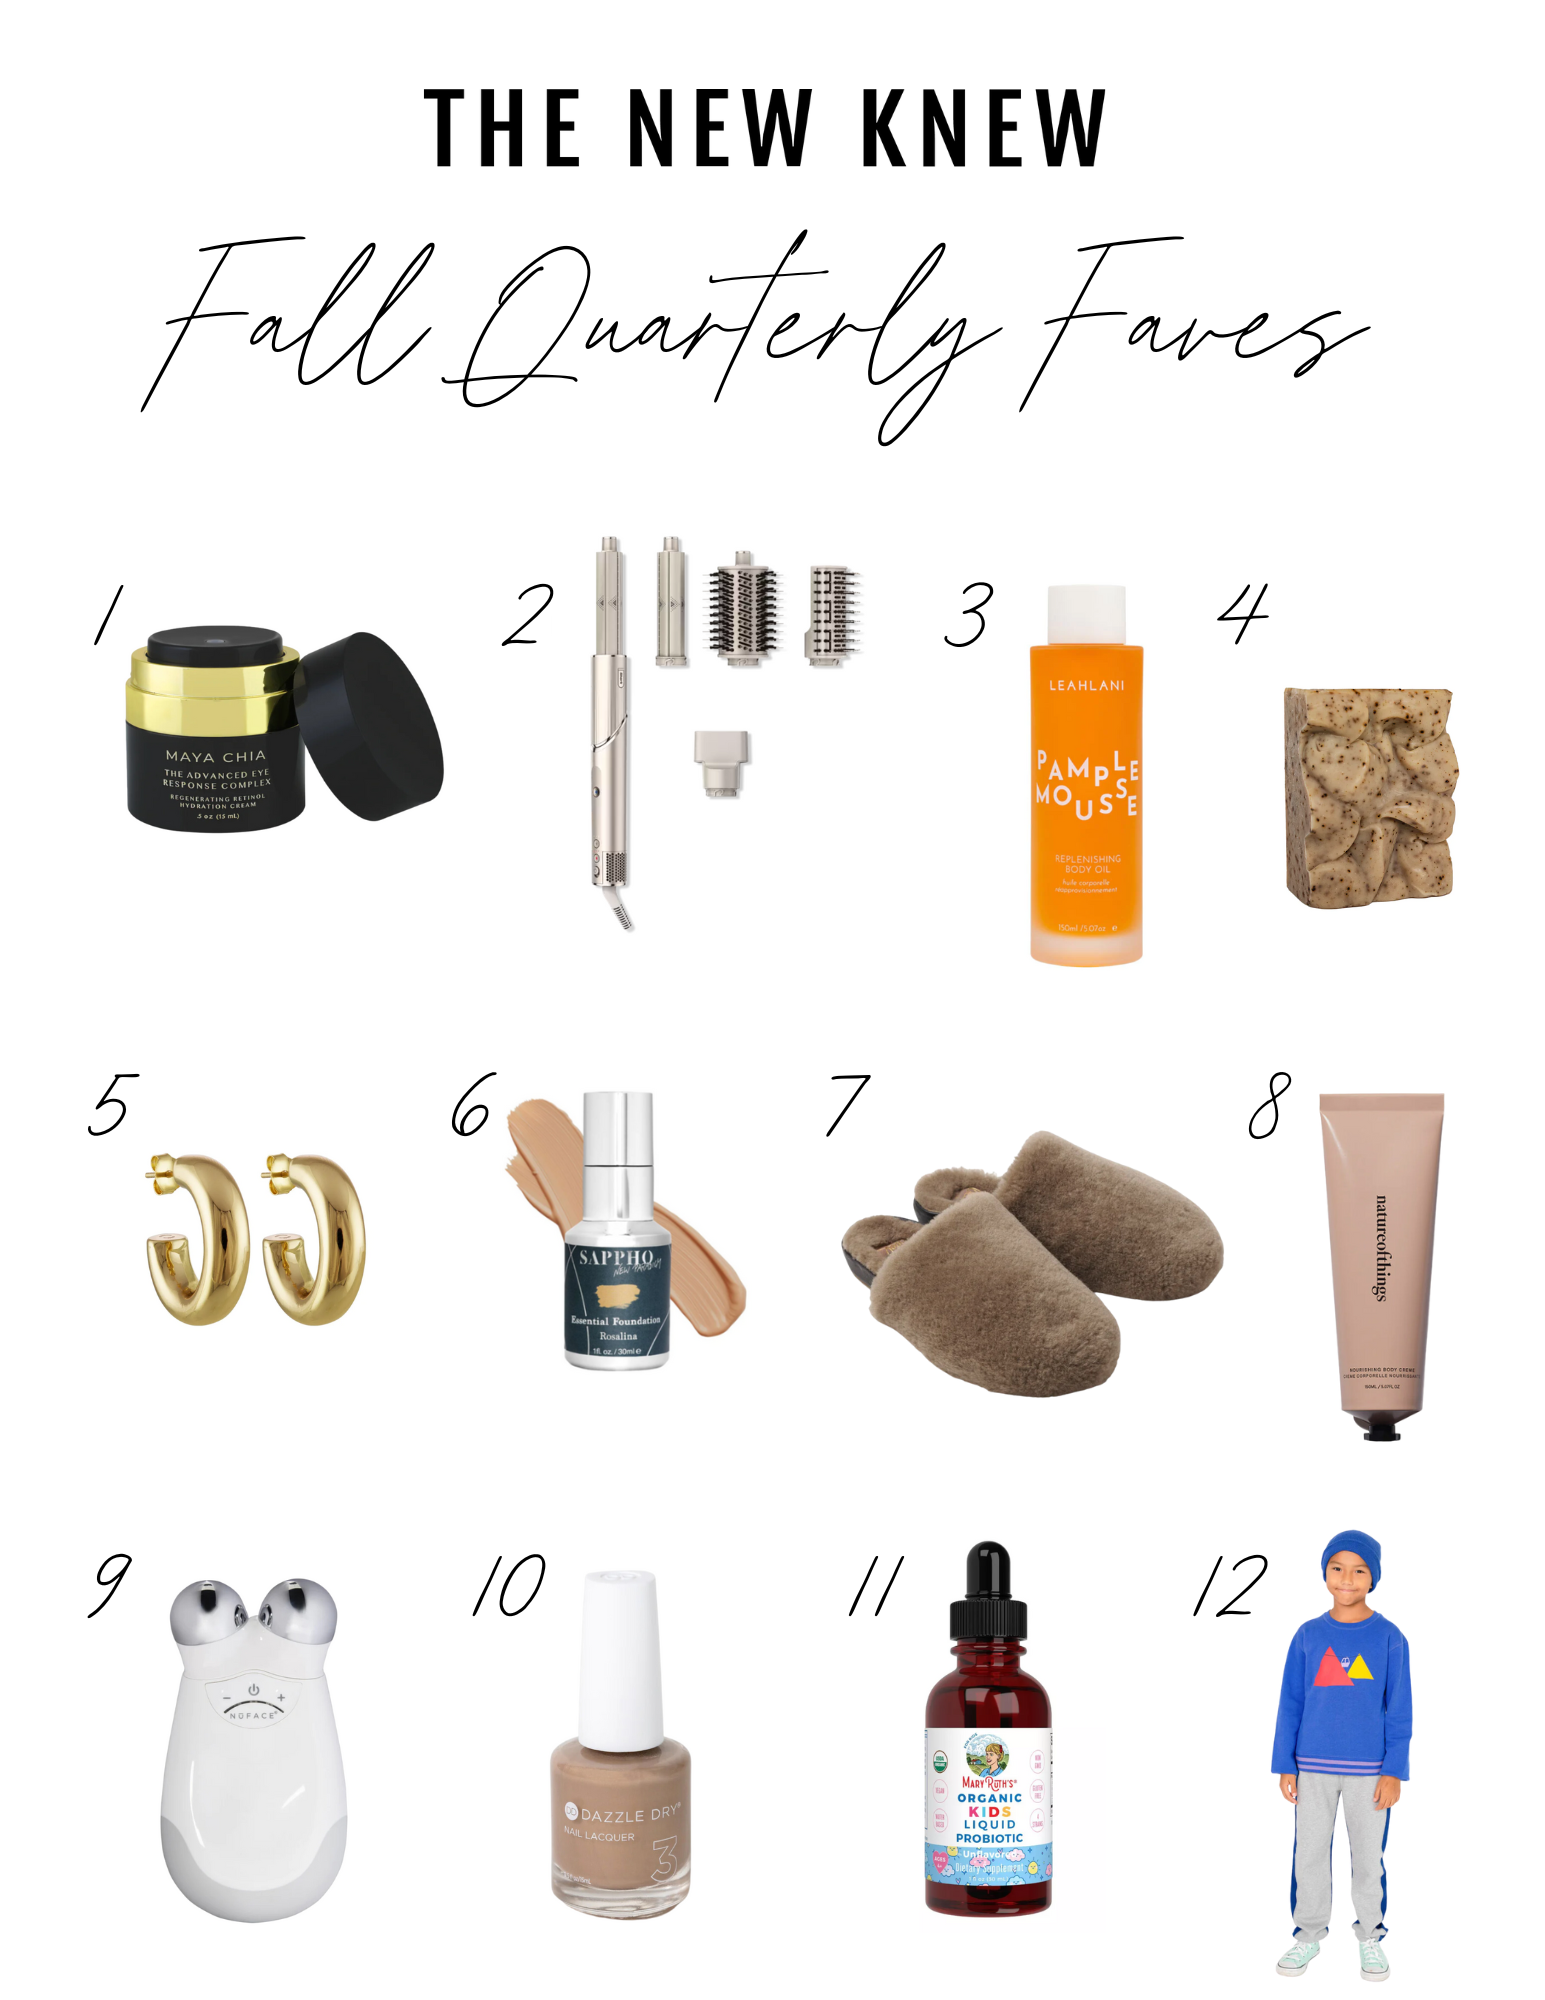 Fall quarterly product picks.